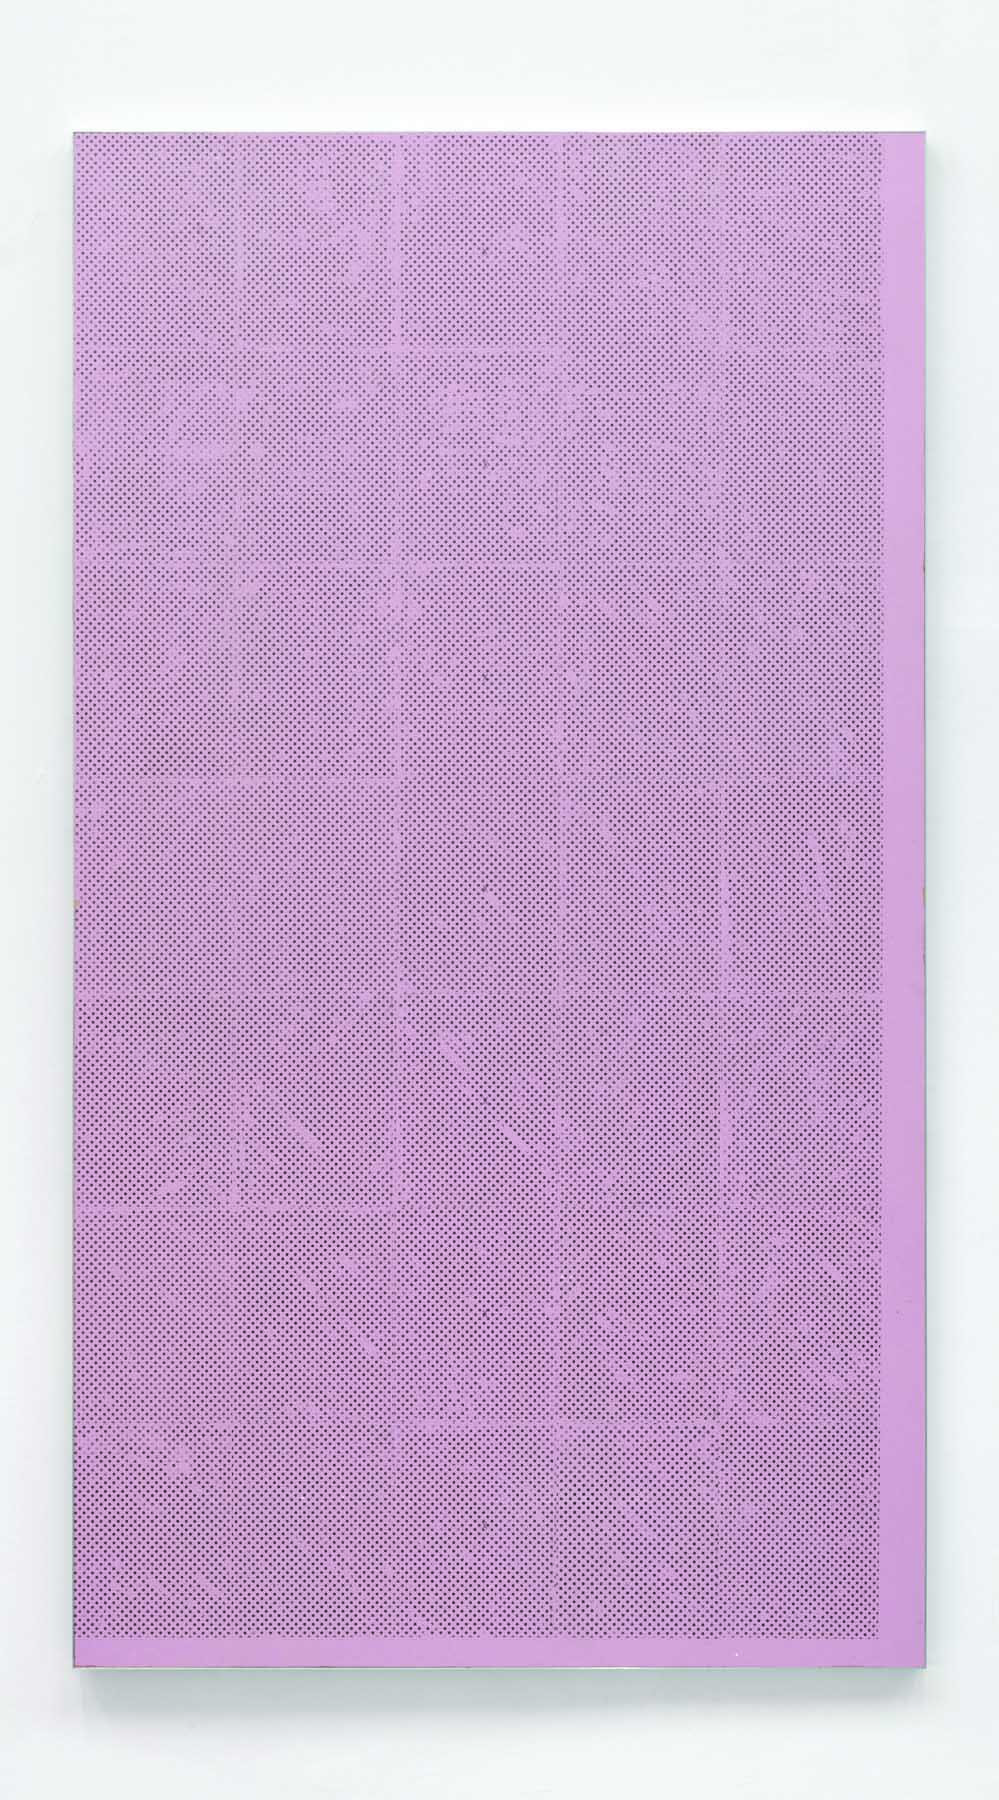 Nick OberthalerUntitled, 2015Transfer print on gypsum board180 x 100 cm